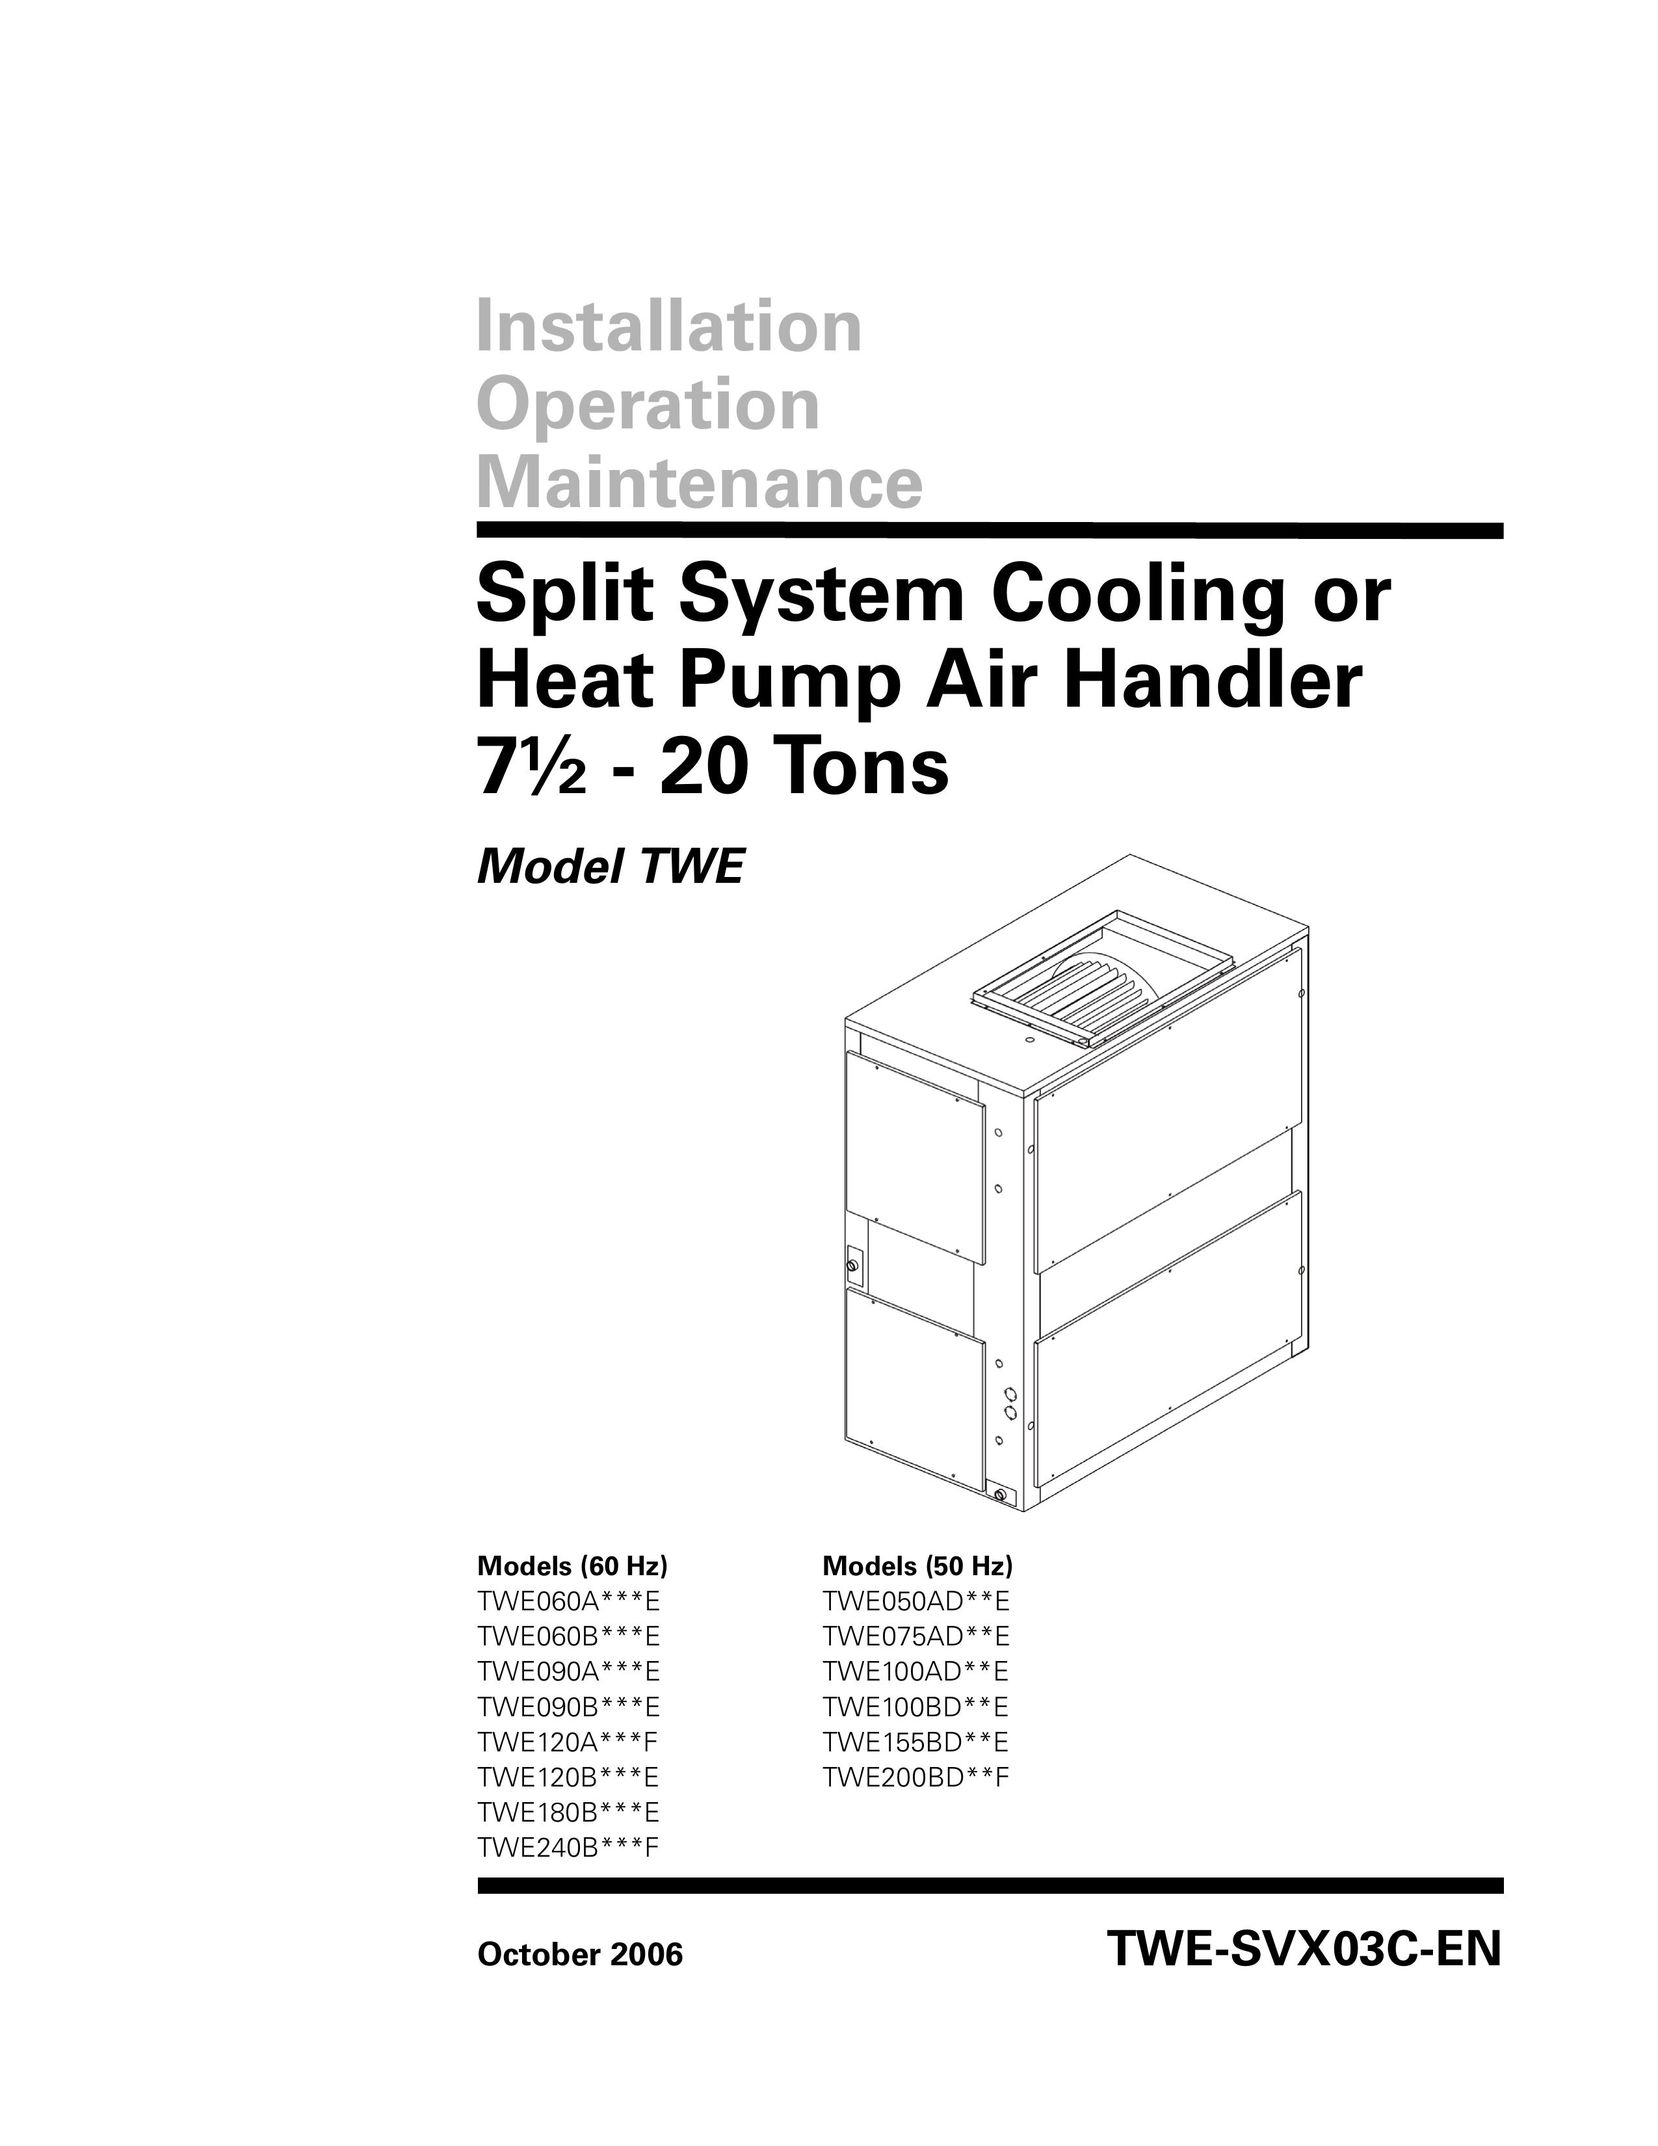 American Standard TWE240B***F Heat Pump User Manual